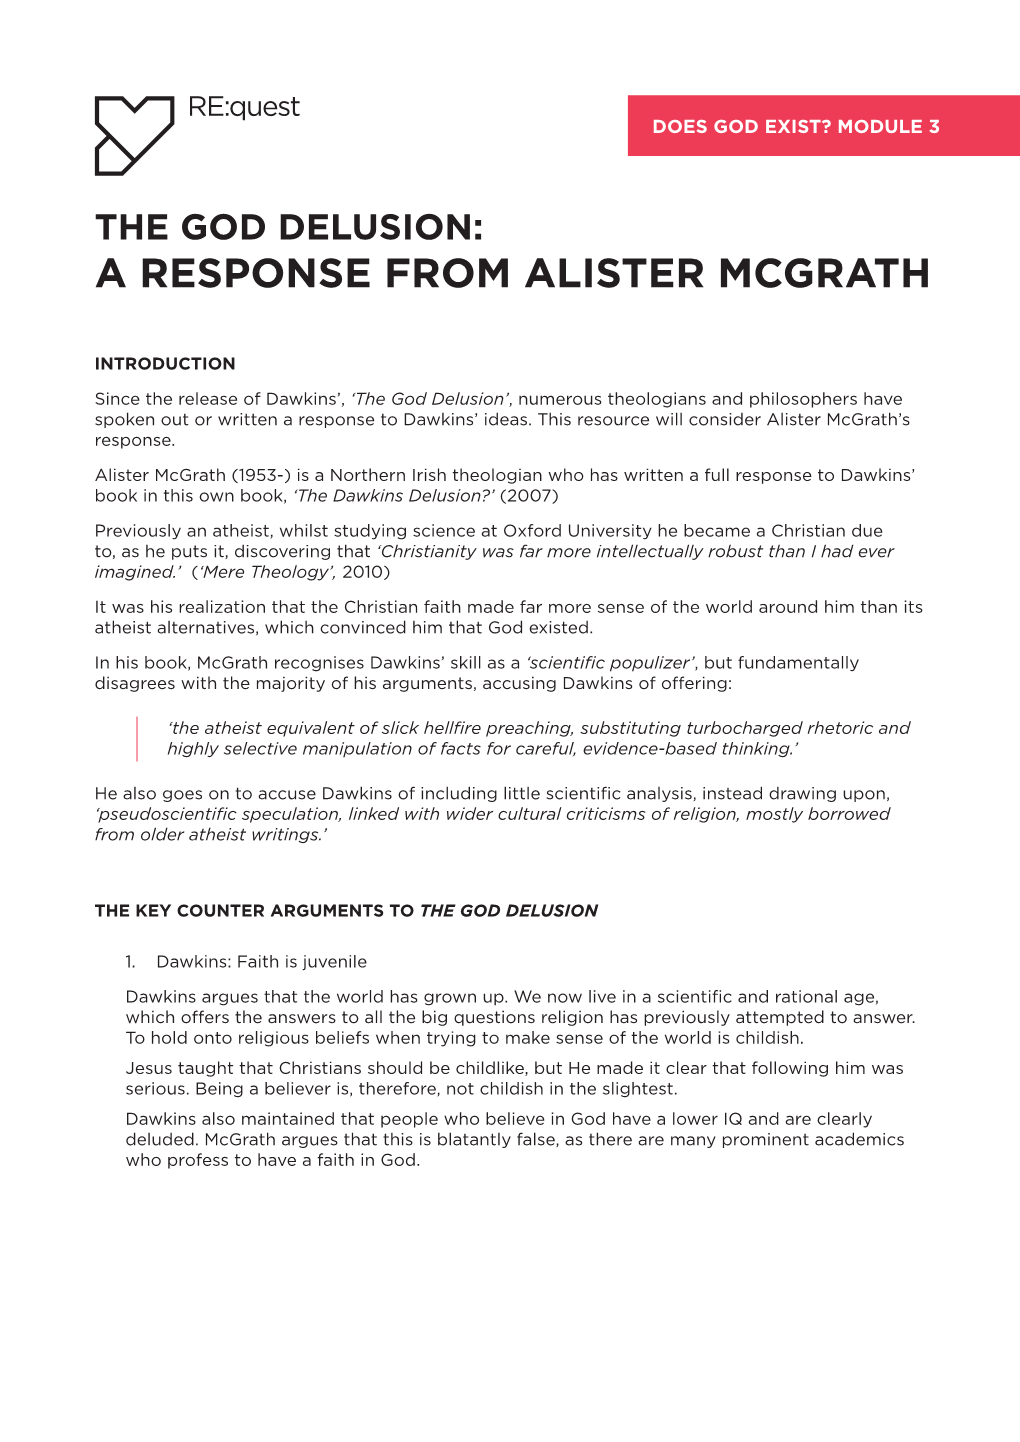 The God Delusion Responses: Alister Mcgrath